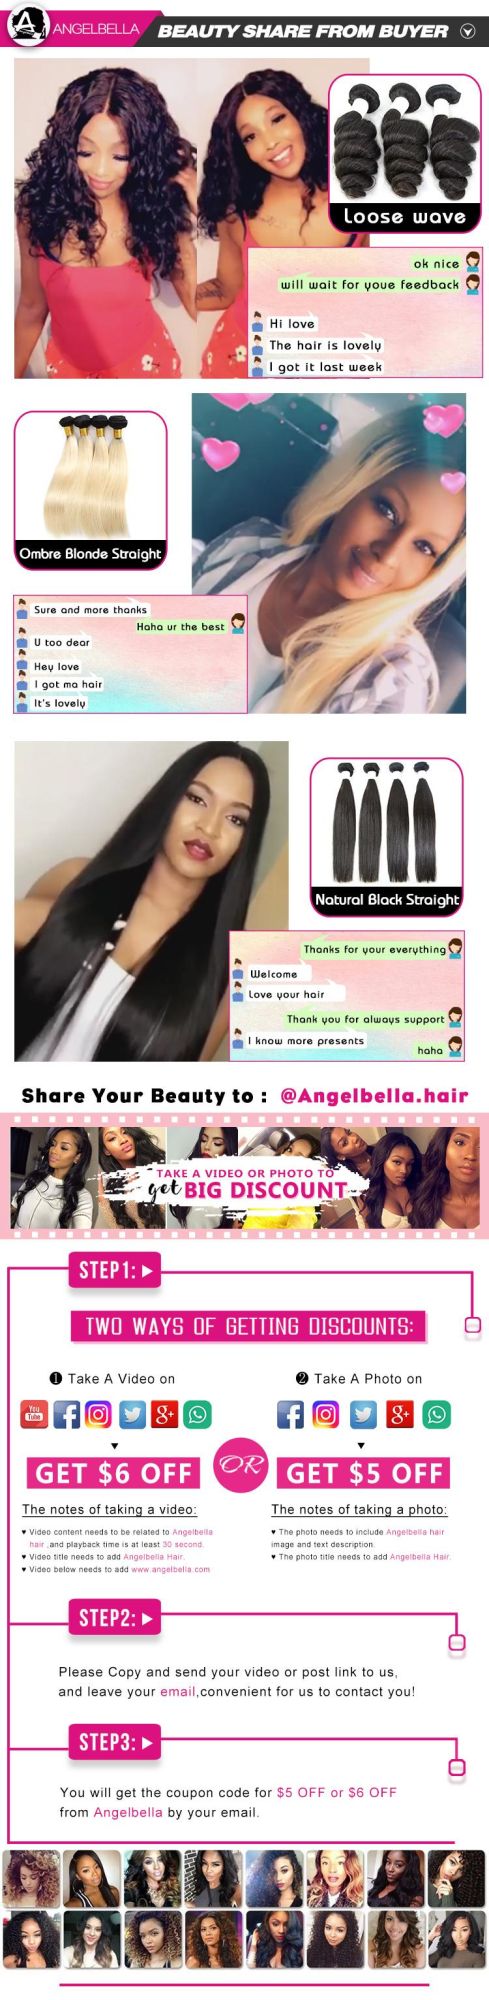 Angelbella Free Sample Brazilian Hair Bundles Wholesale Virgin Natural Hair Bundle